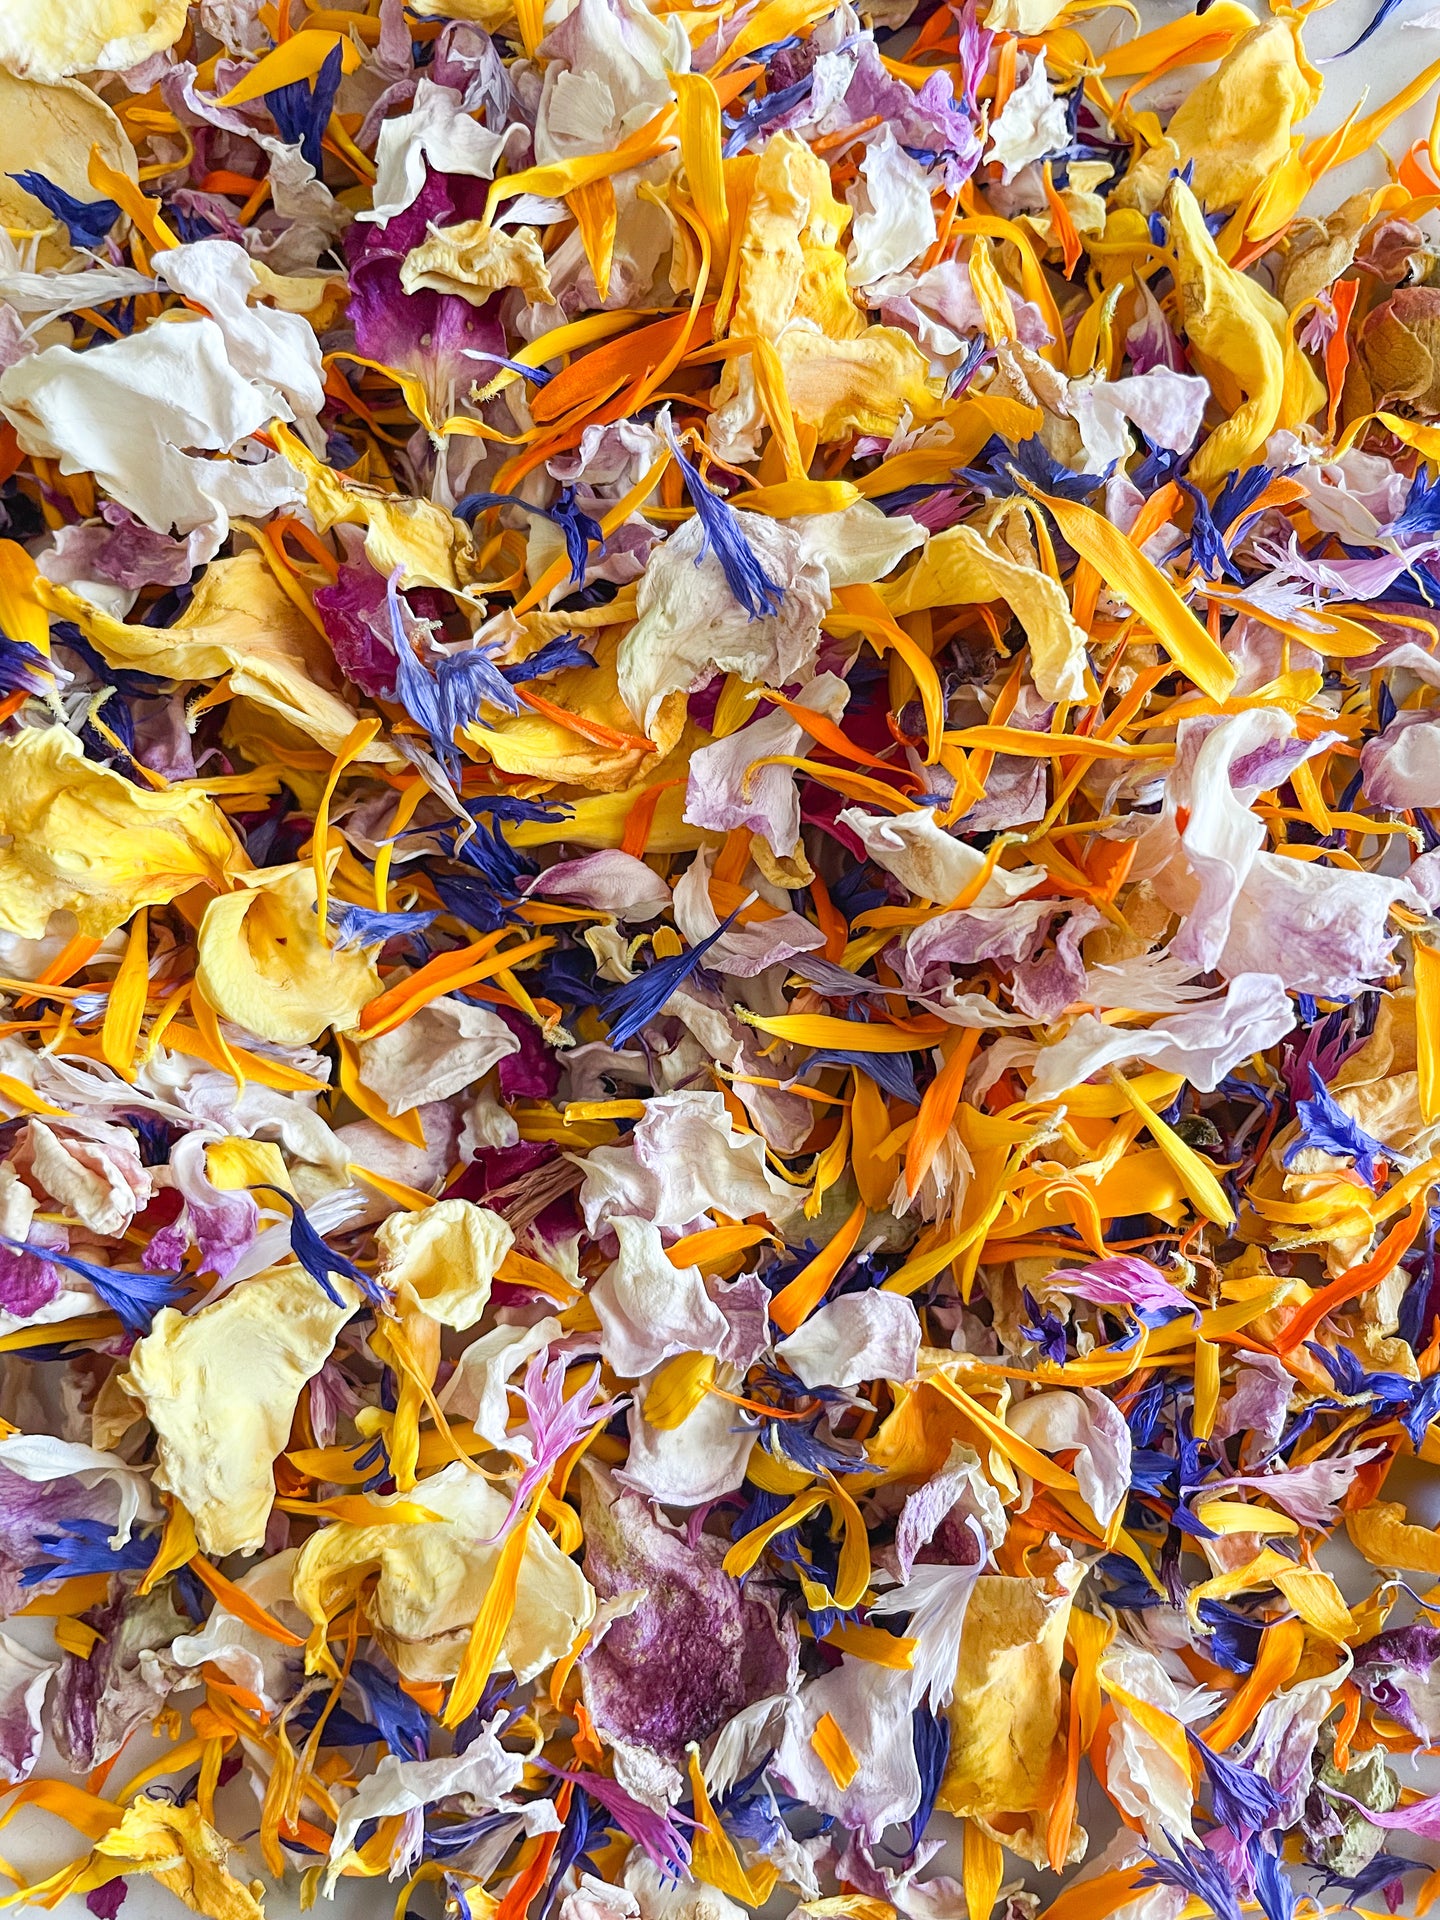 Rainbow Dried Flower Confetti -Edibles mix